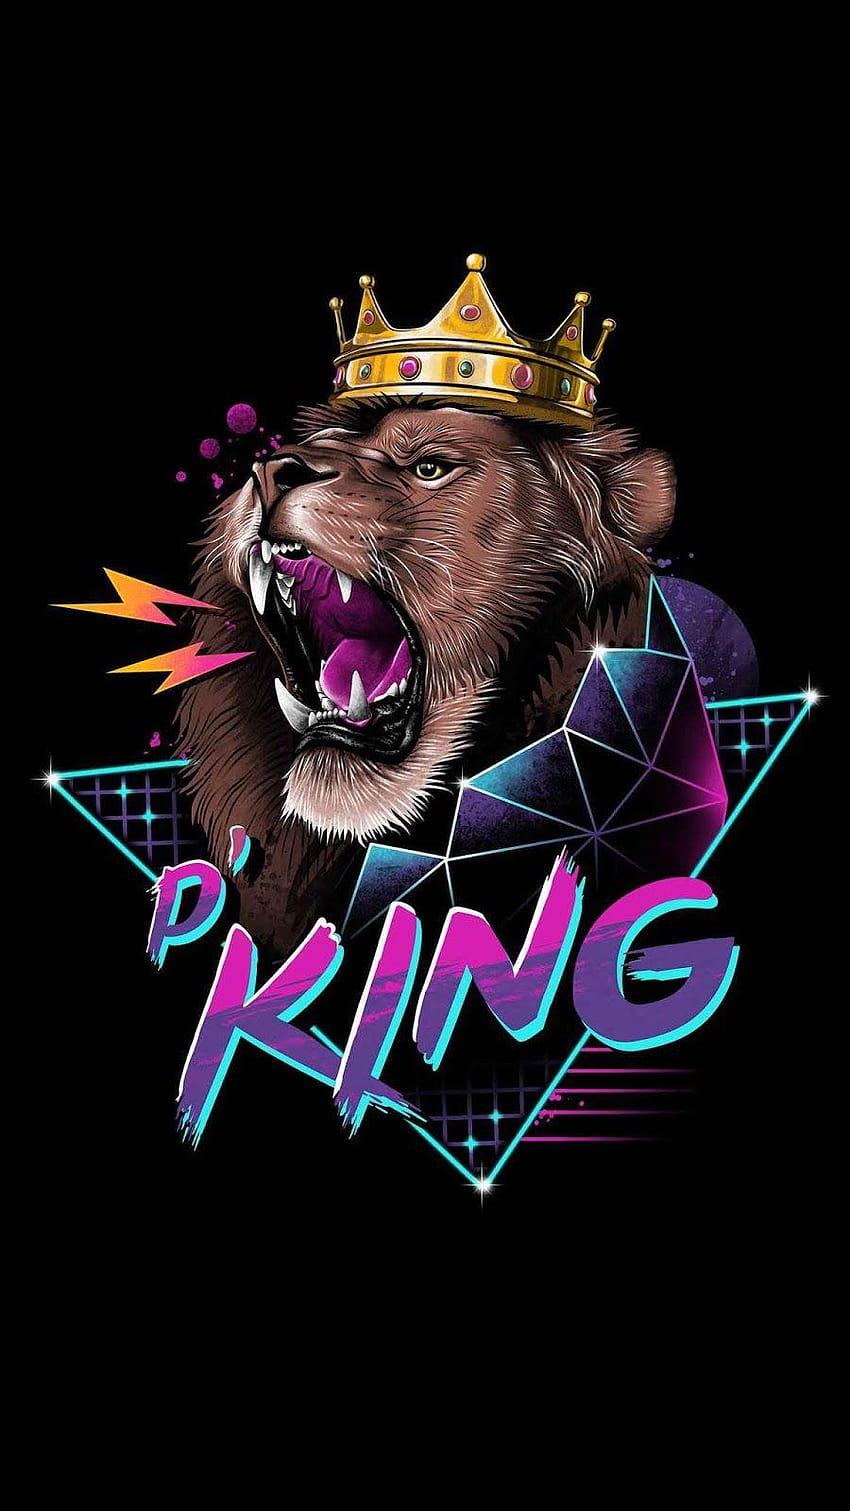 The Lion King (1994) logo by JonahCampbellRocks04 on DeviantArt